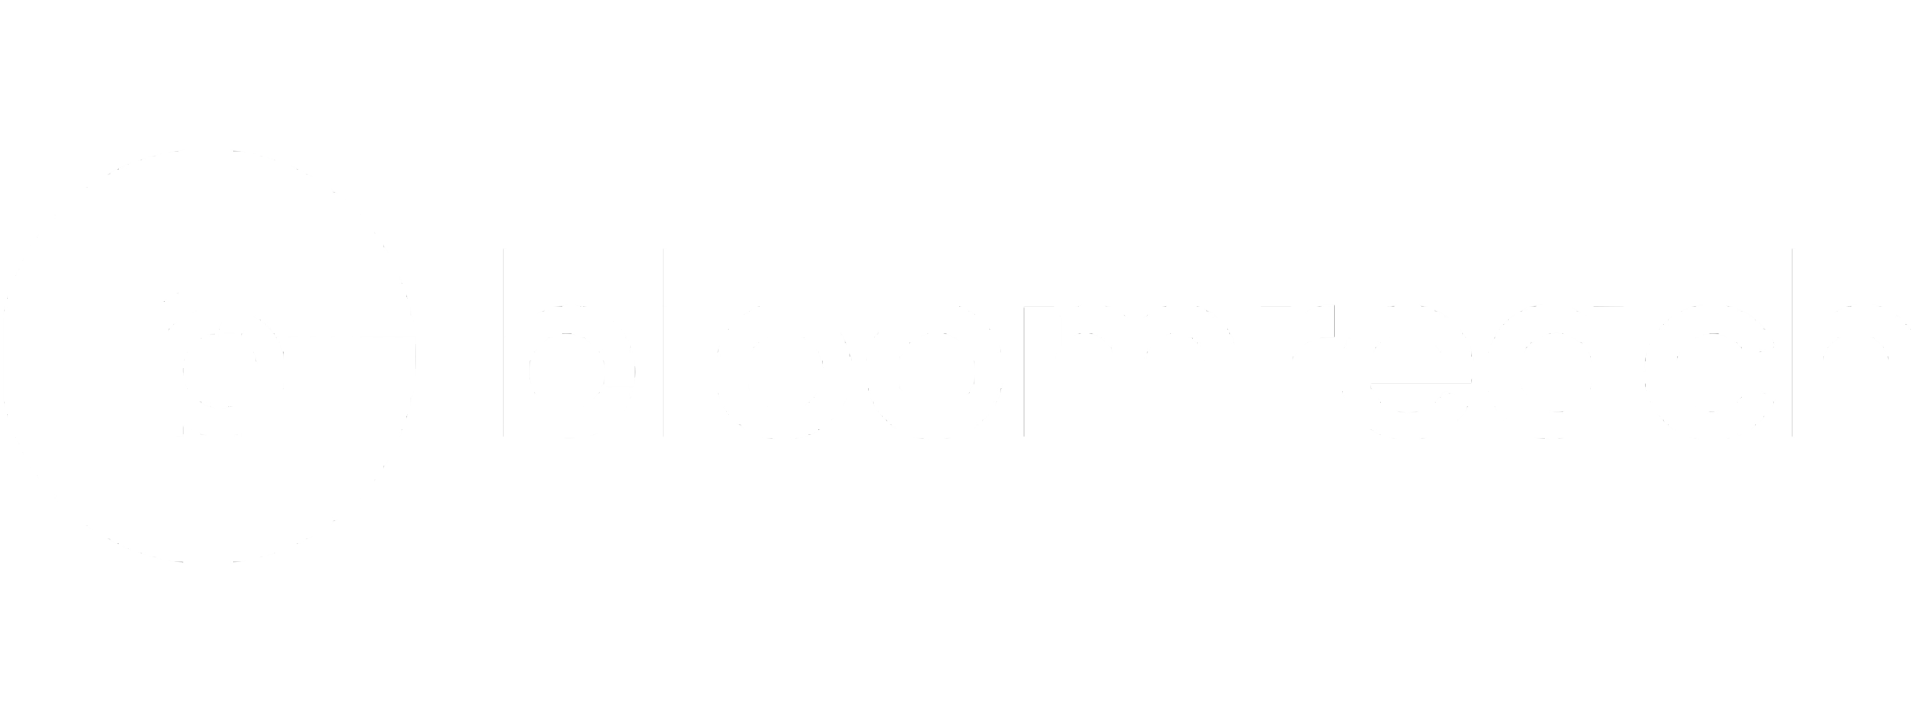 Bloomreach Logo 